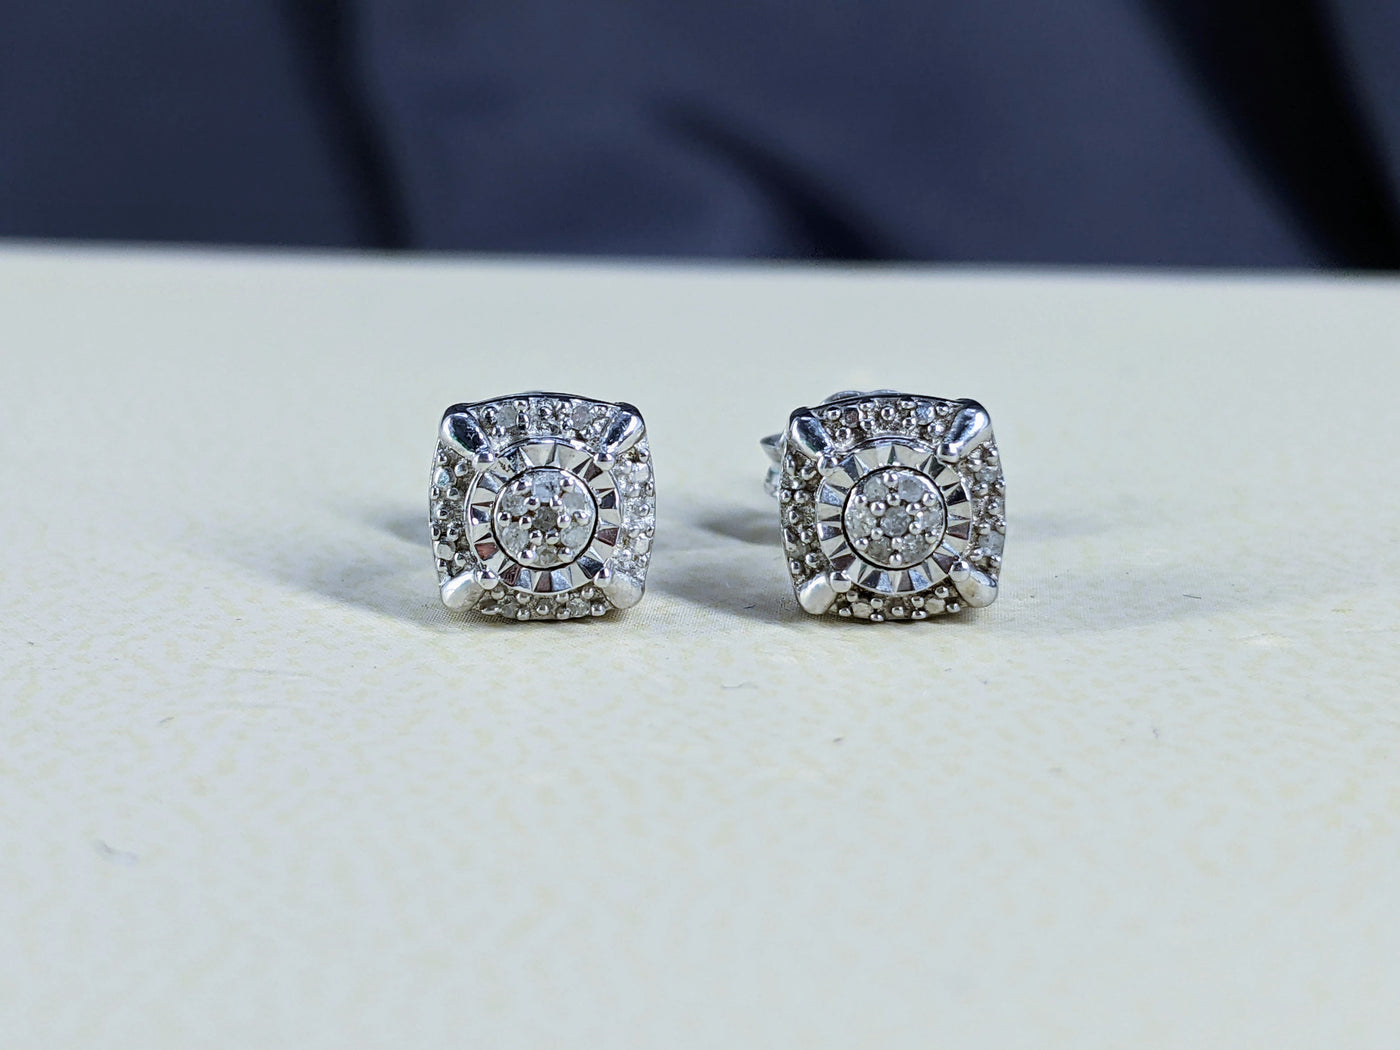 Pendant and Stud Earrings 0.20 Carat Natural Diamond Set WHILE SUPPLIES LAST